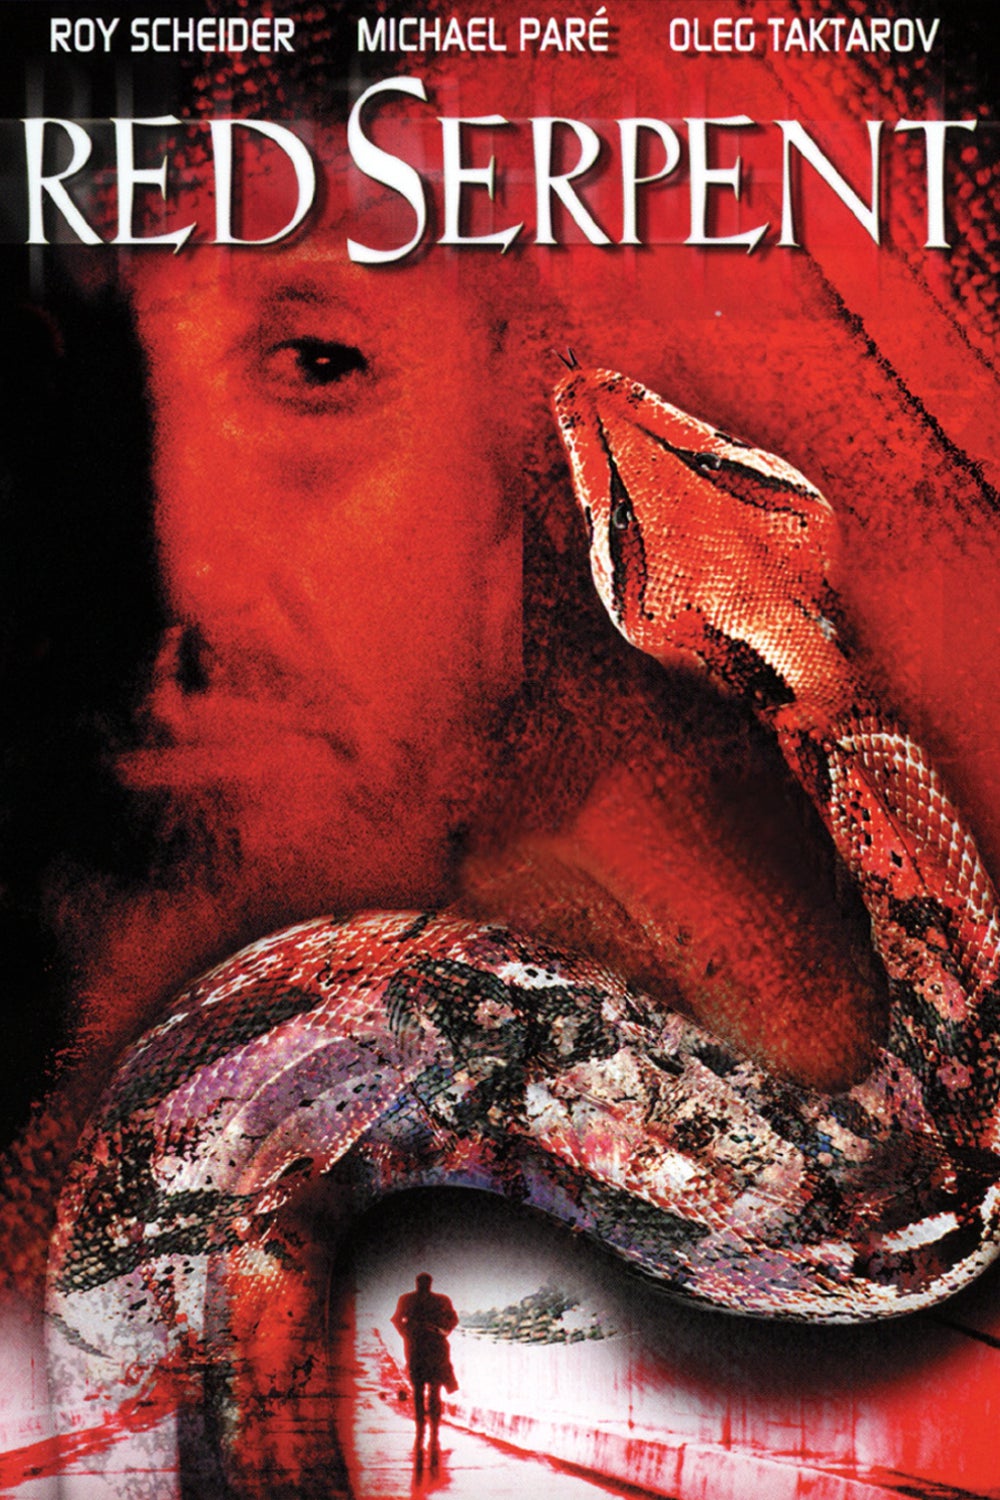 Red Serpent (2002)